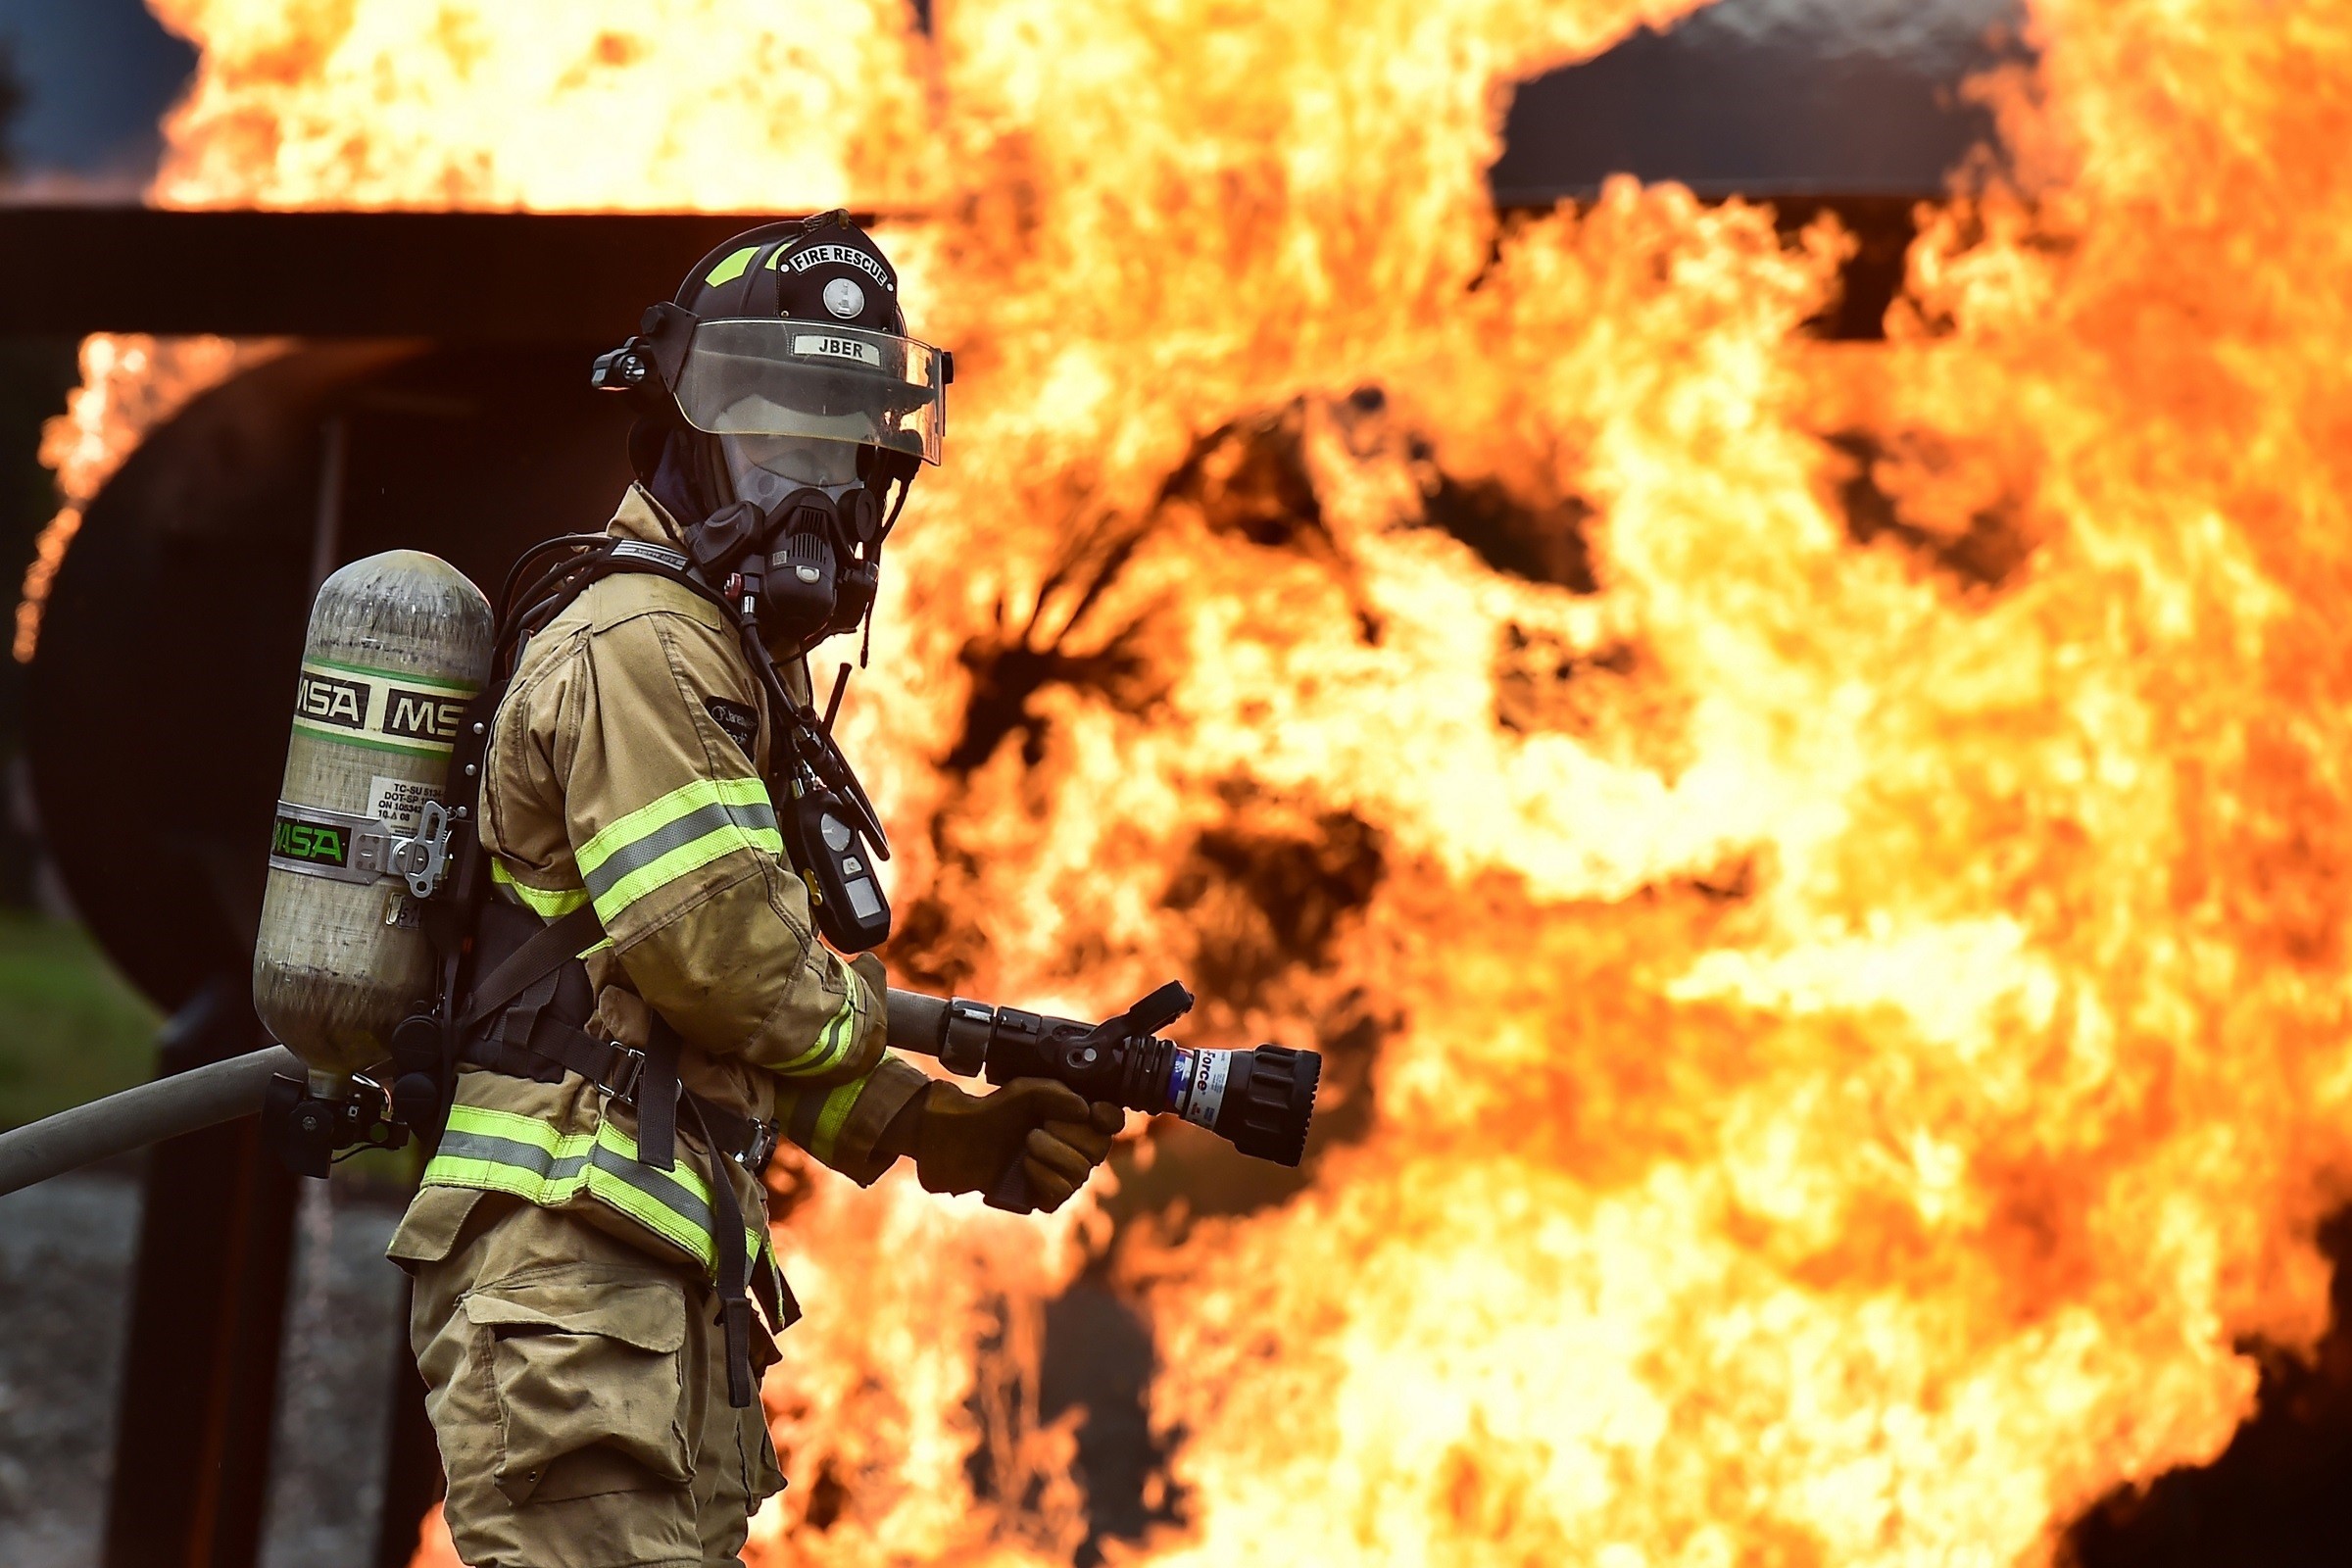 2400x1600 Firefighter Fireman training hd wallpaper background image id